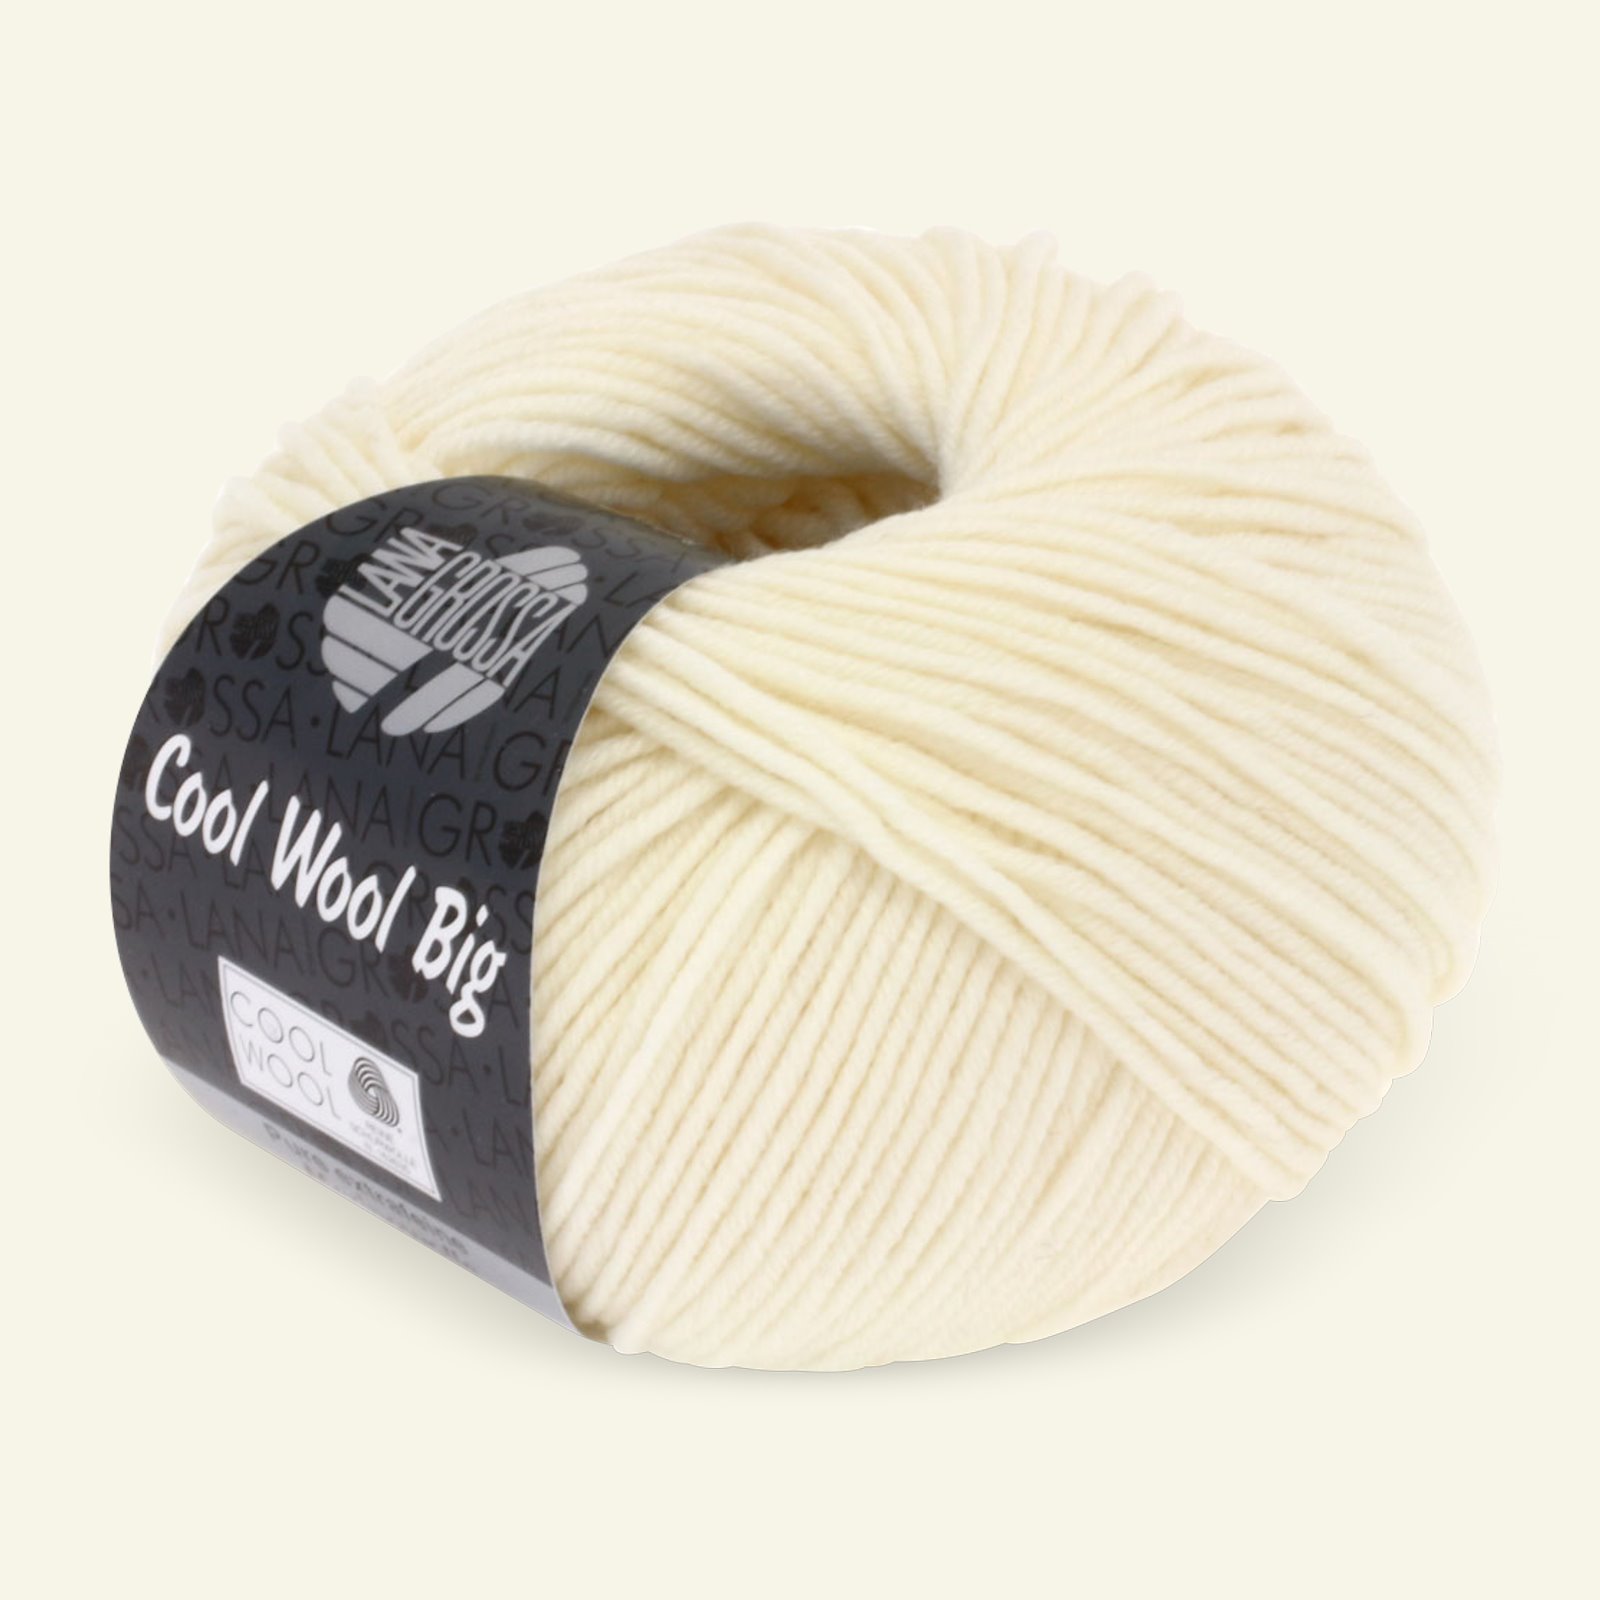 Lana Grossa, extrafin merinouldgarn "Cool Wool Big", offwhite 90001109_pack